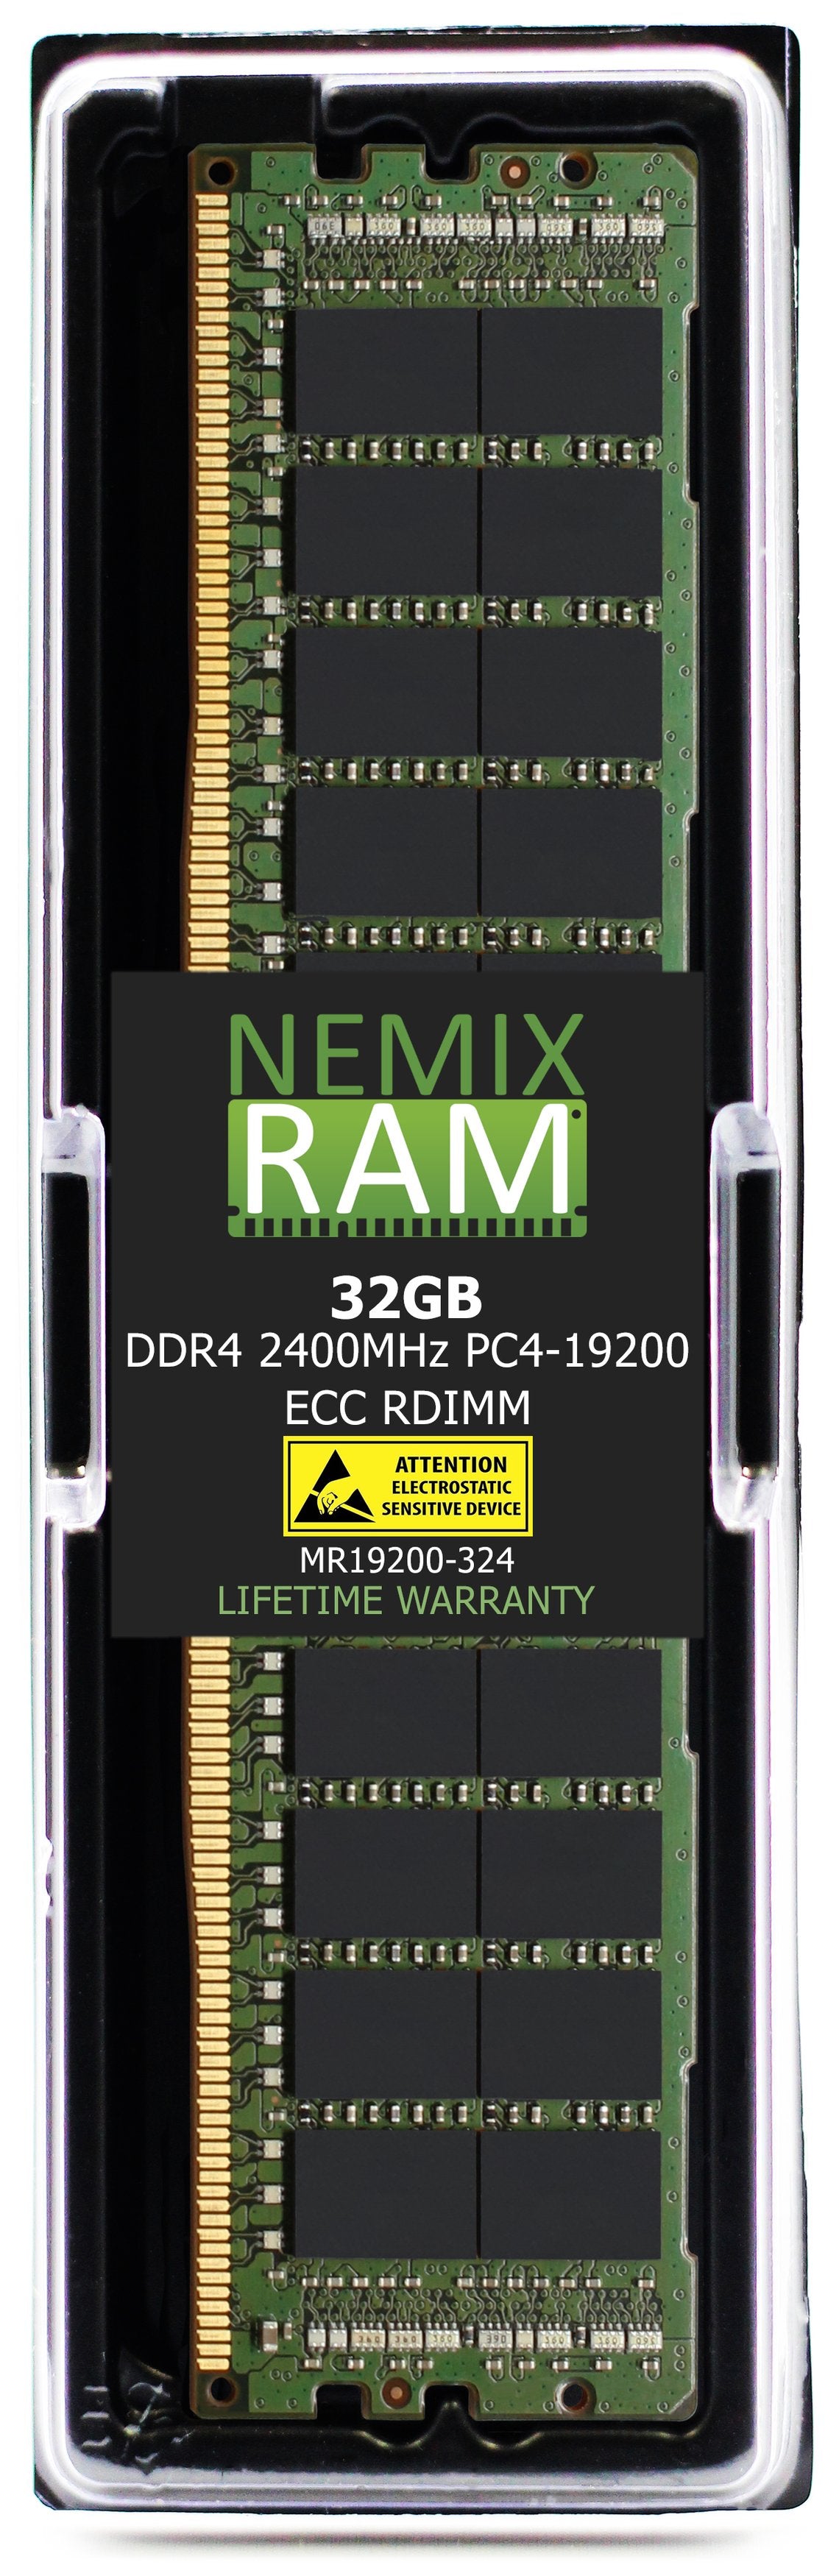 Hynix HMAA4GR8AMR4N-UH 32GB DDR4 2400MHZ PC4-19200 RDIMM Compatible Memory Module